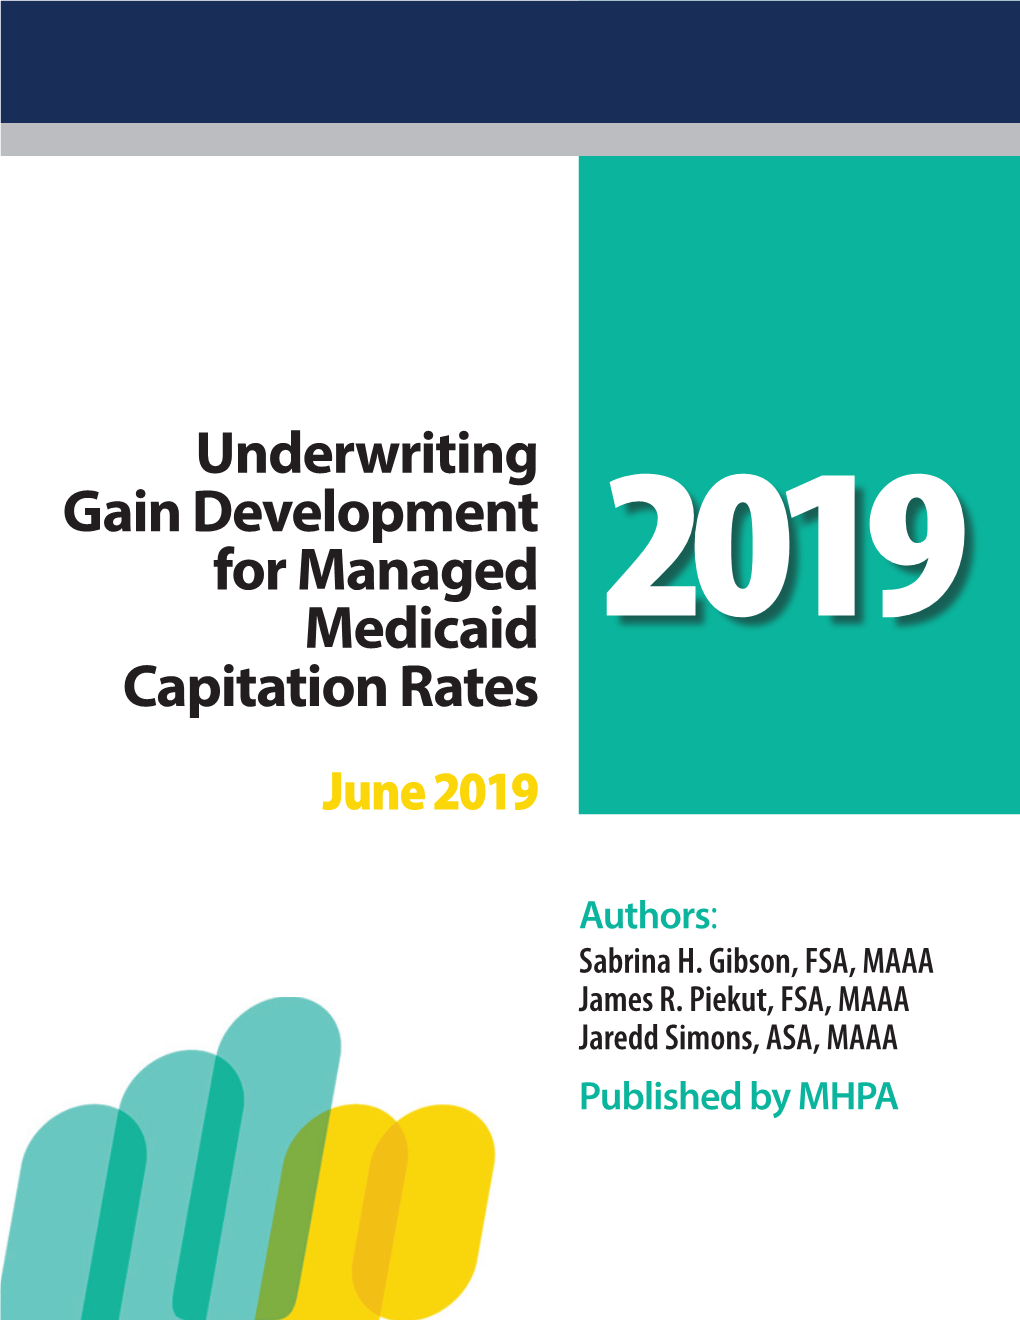 Underwriting Gain Development for Managed Medicaid Capitation Rates